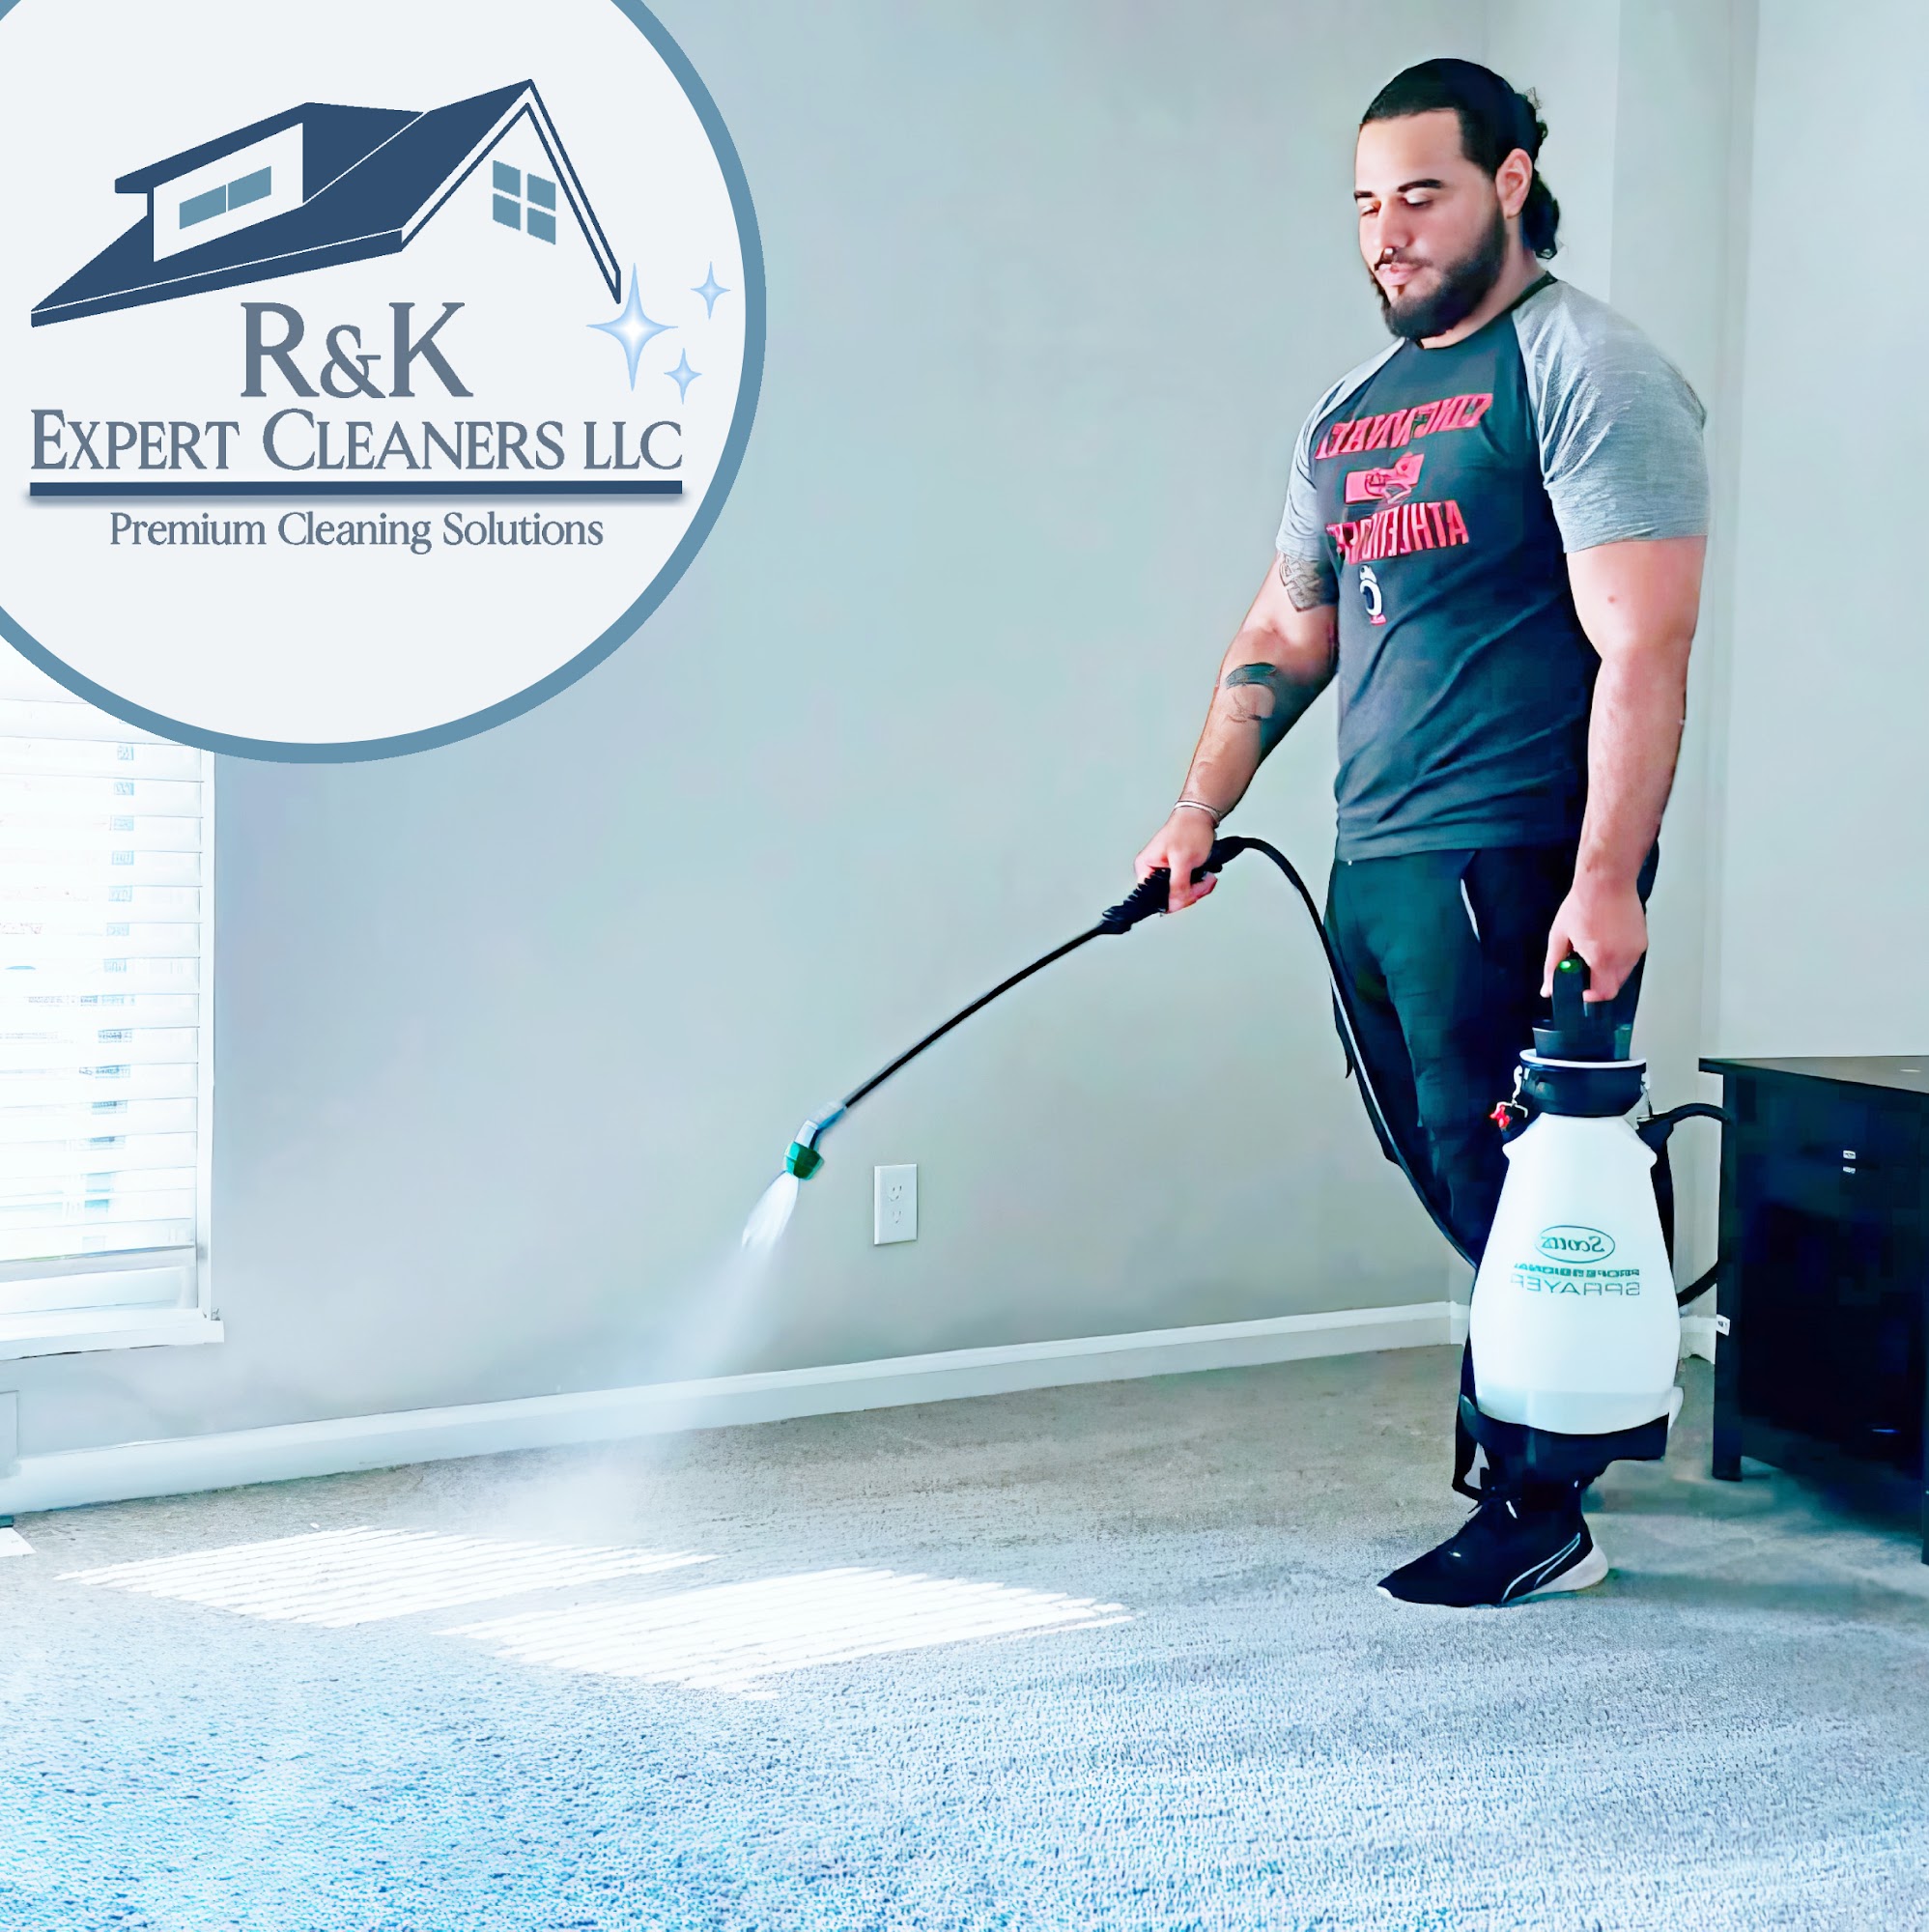 R&K Expert Cleaners LLC